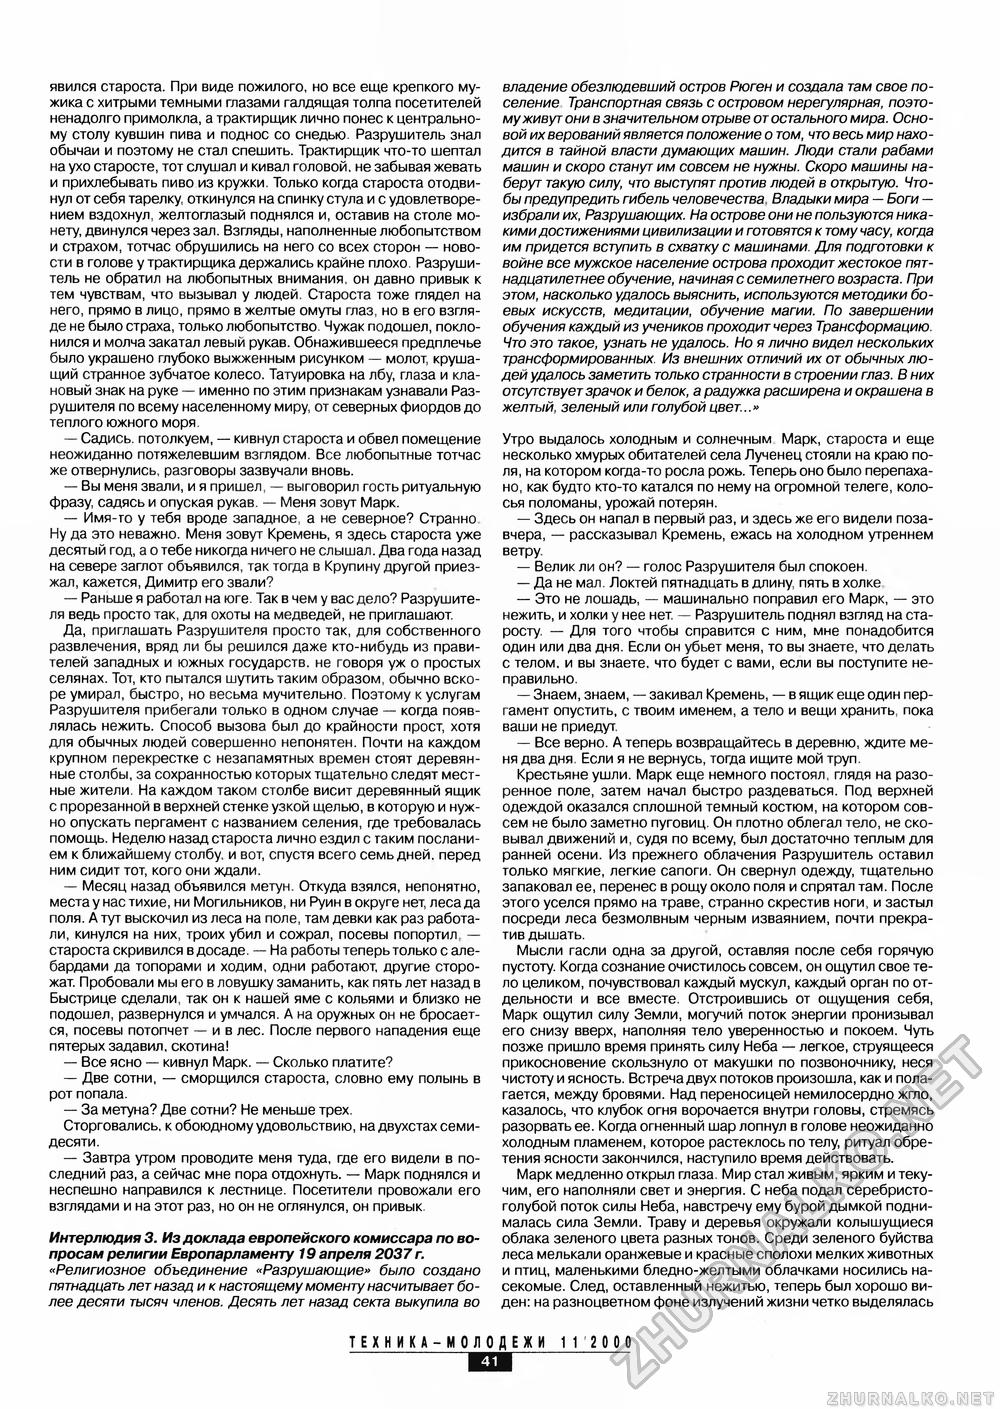 Техника - молодёжи 2000-11, страница 43